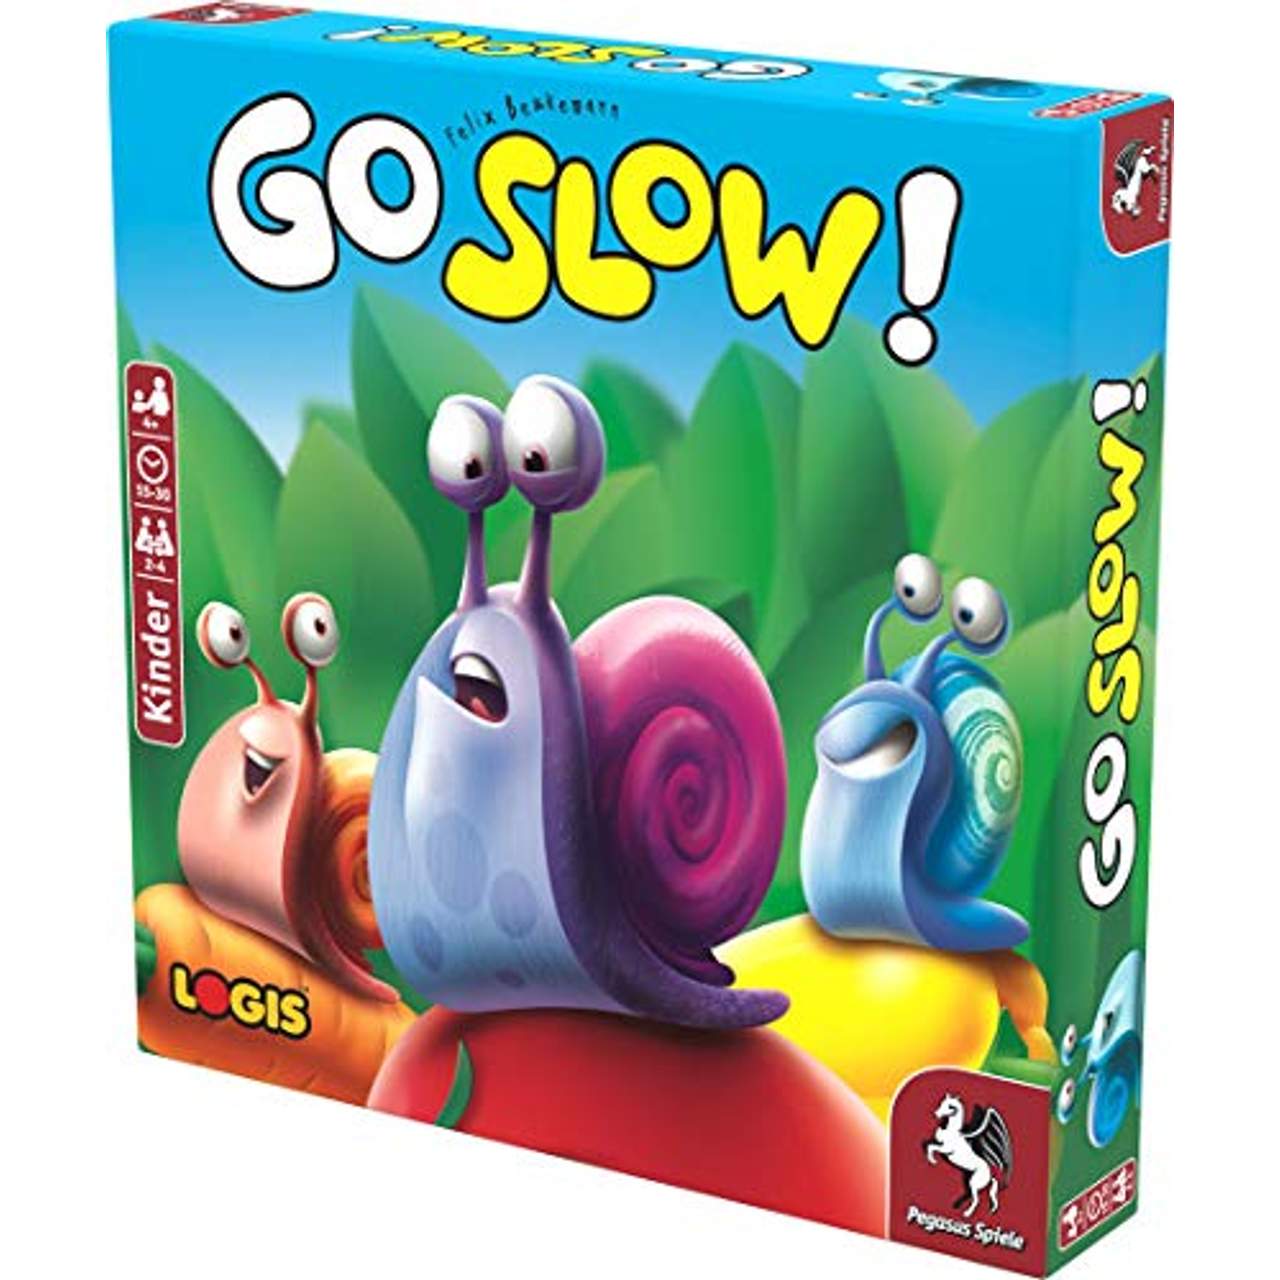 Pegasus Spiele 66110G Go Slow *Empfohlen Kinderspiel 2020*